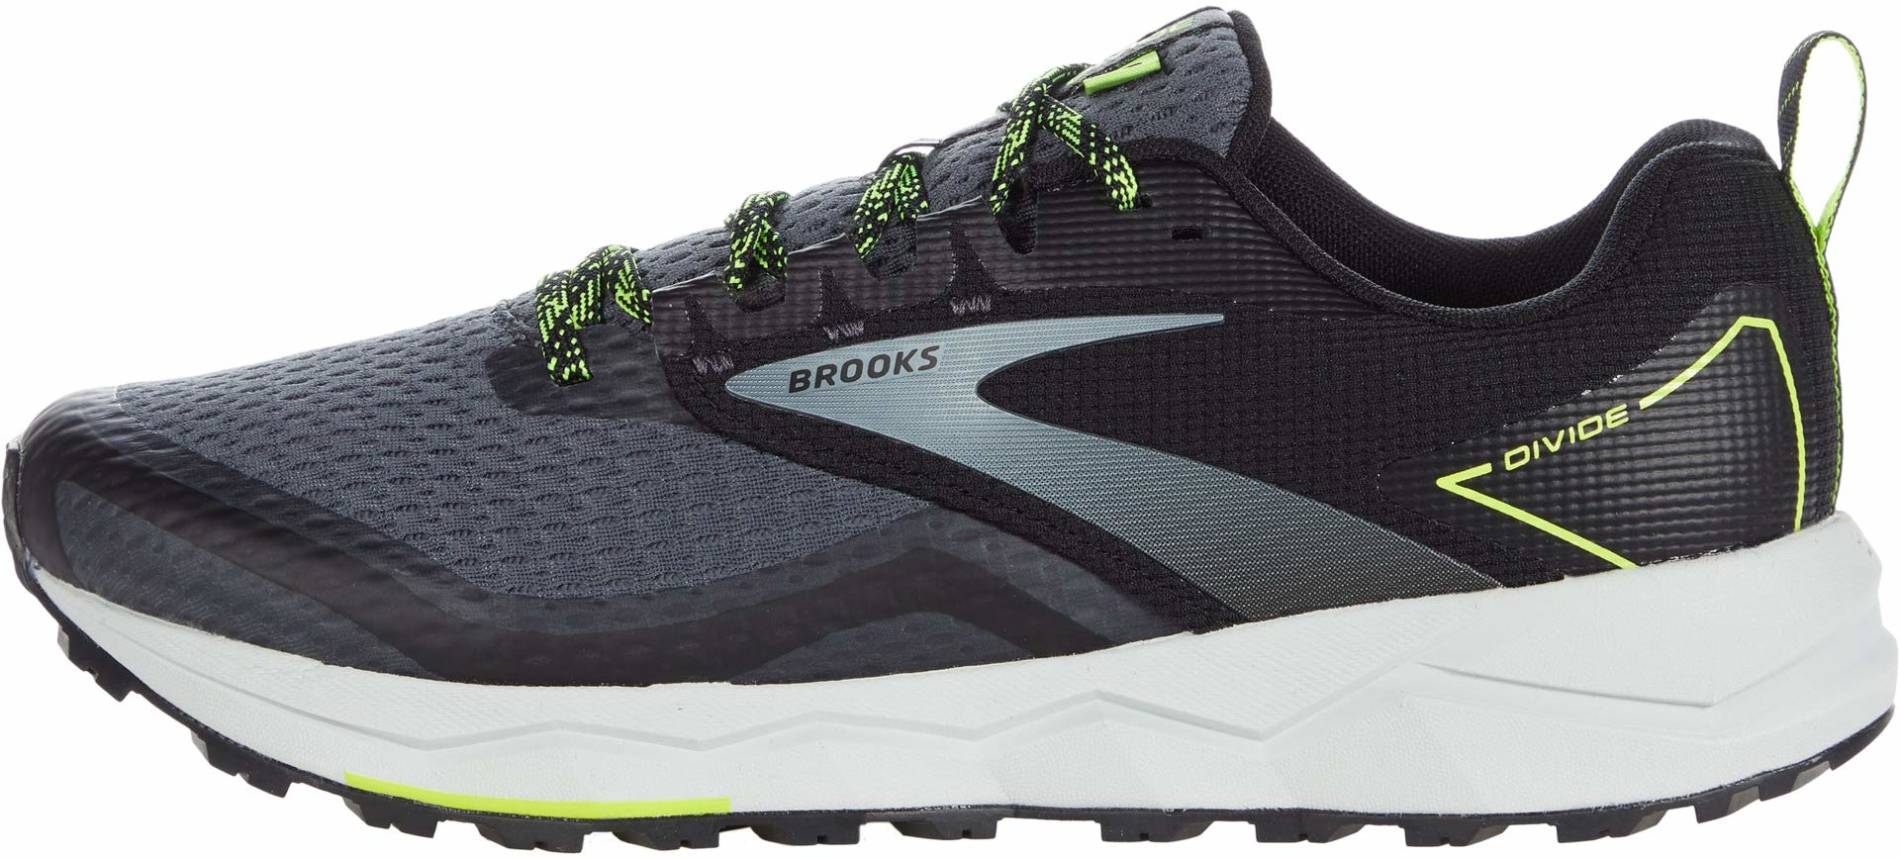 Black/Ebony/Nightlife Brooks Divide 2 Mens Trail Running Shoes 